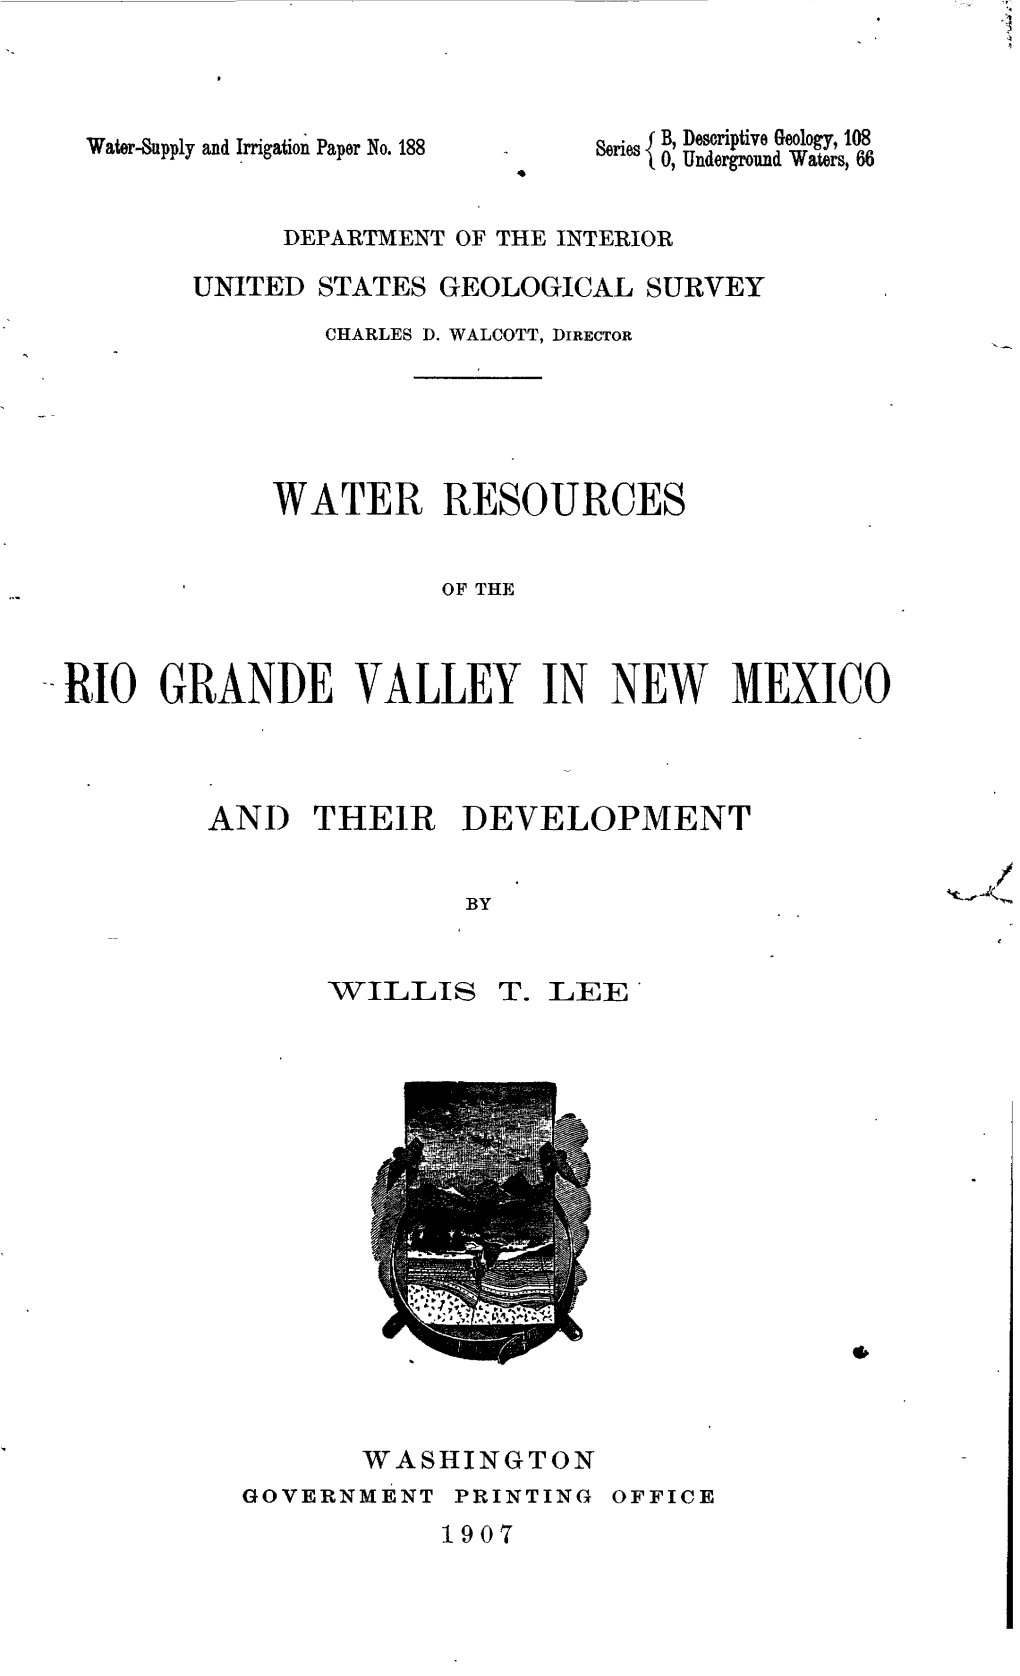 Rio Grande Valley in New Mexico